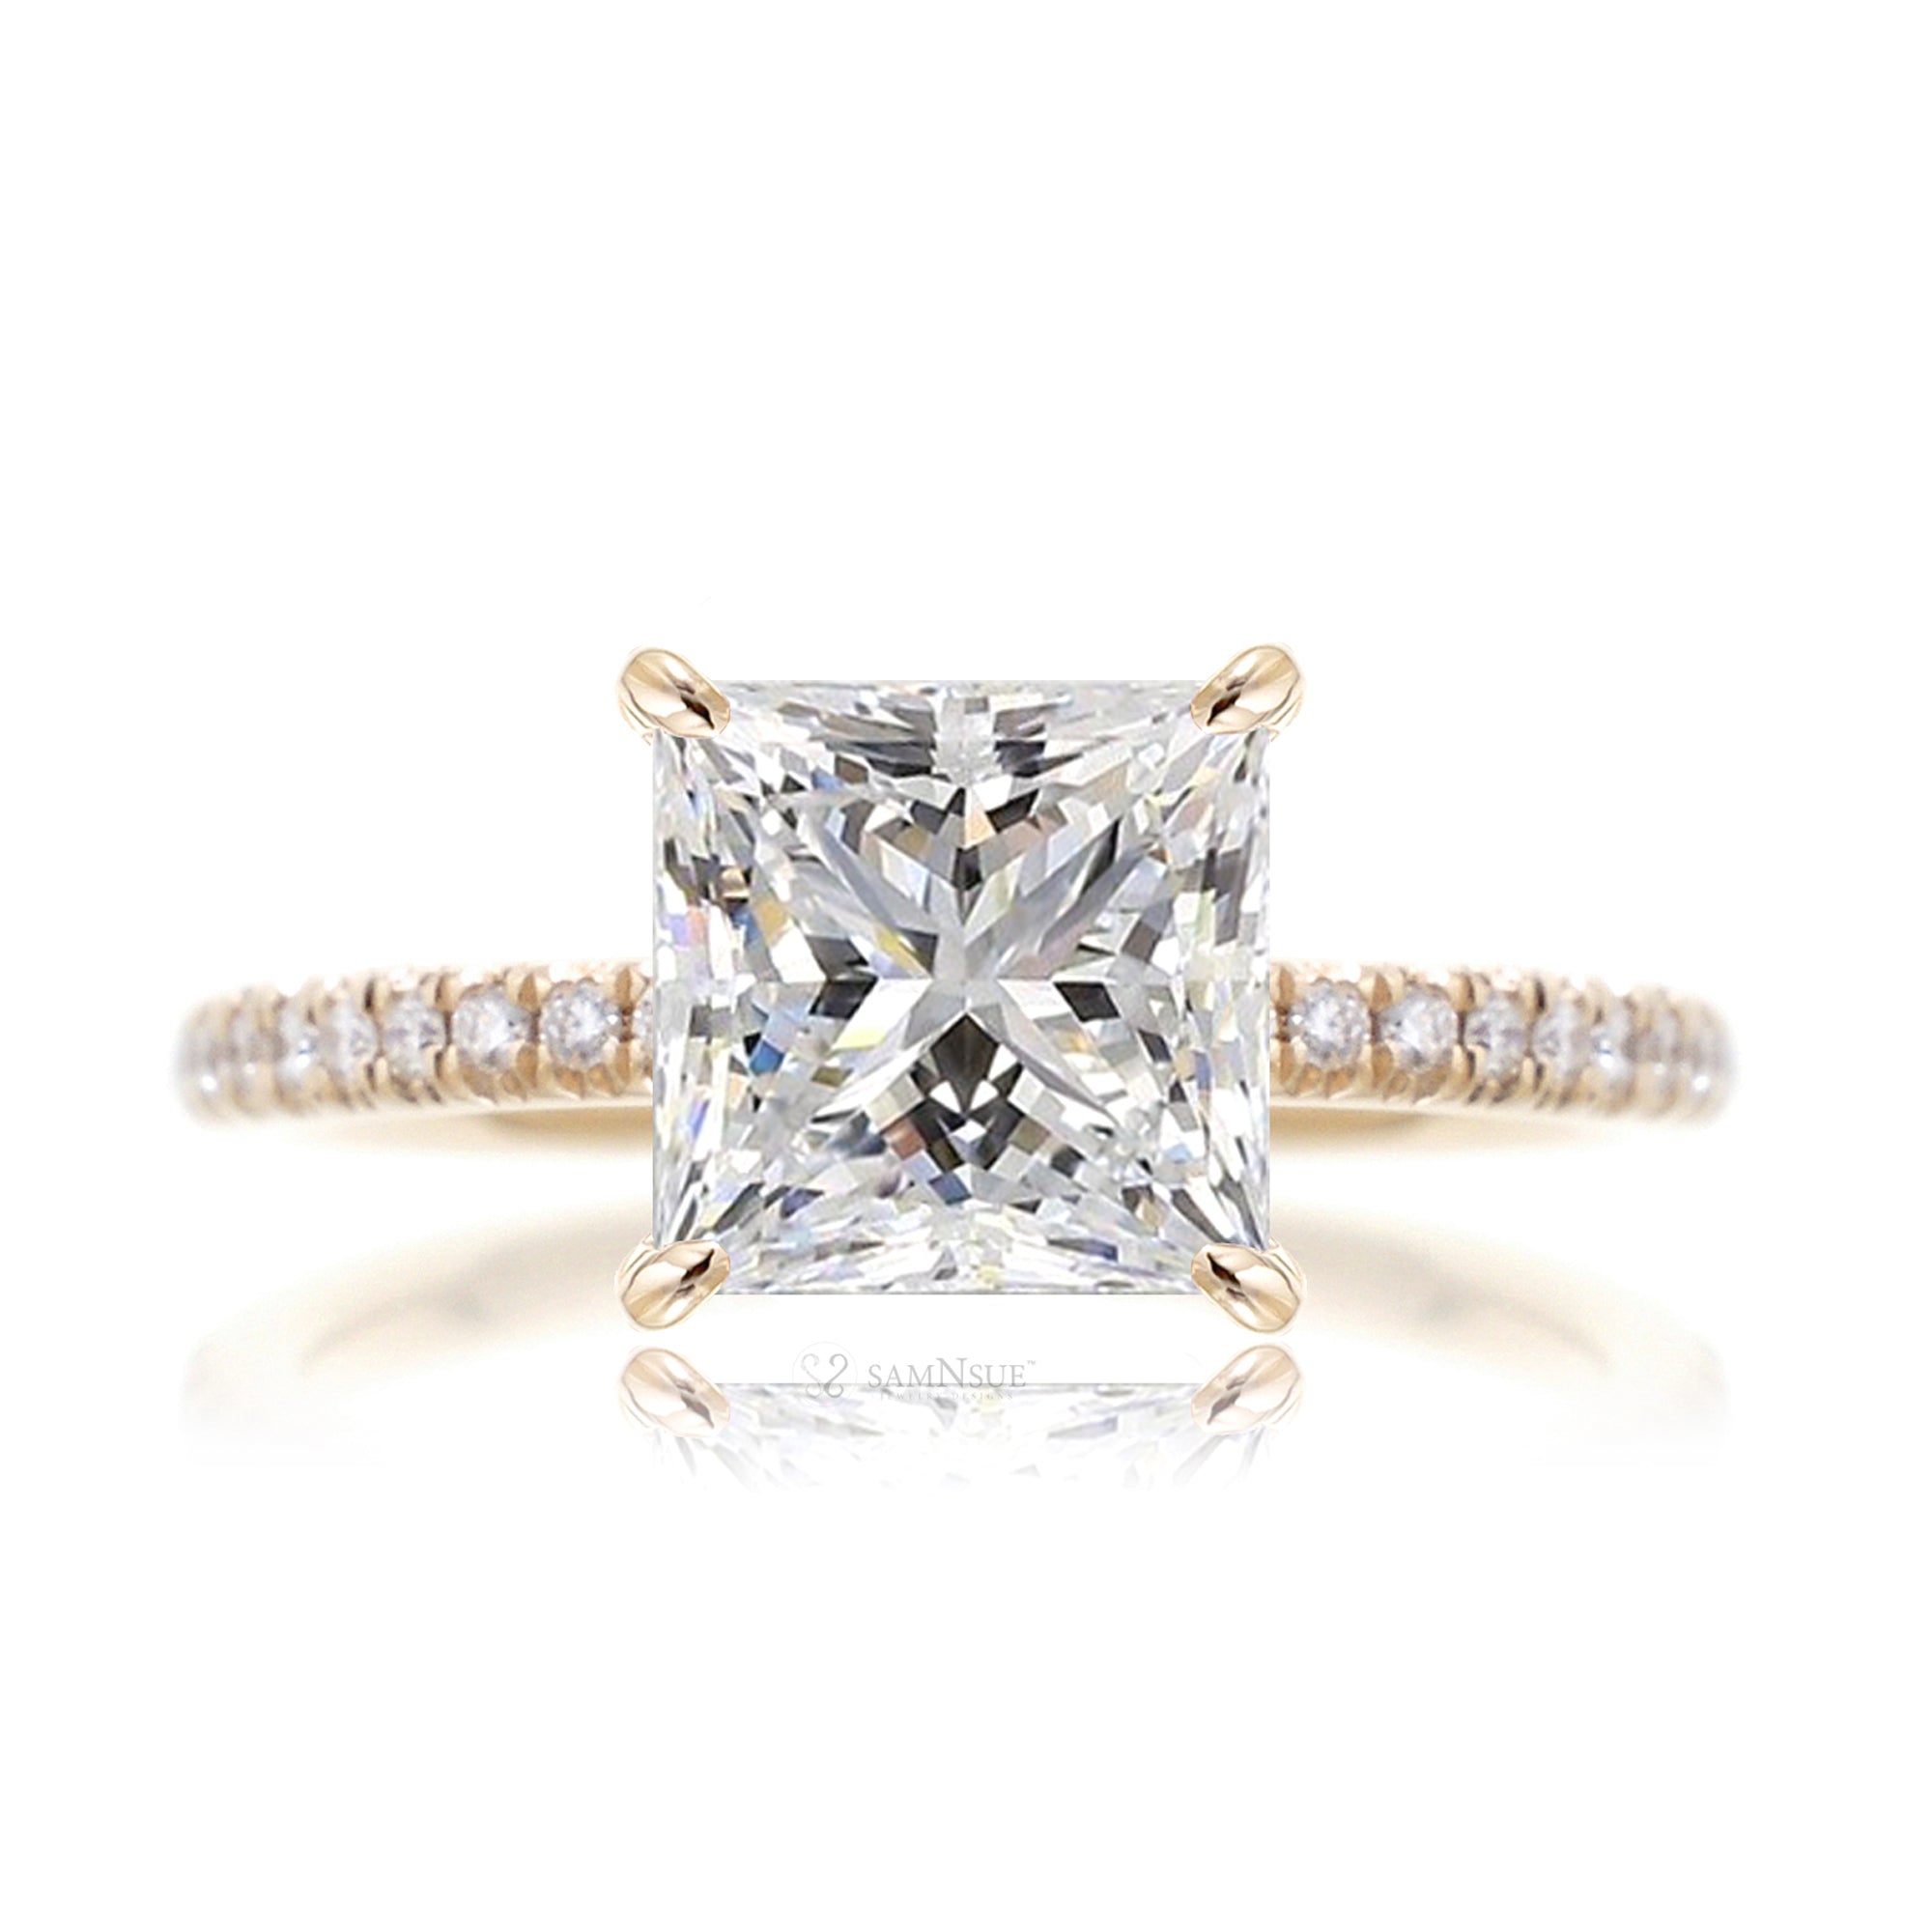 Princess cut lab-grown diamond engagement ring yellow gold - The Ava